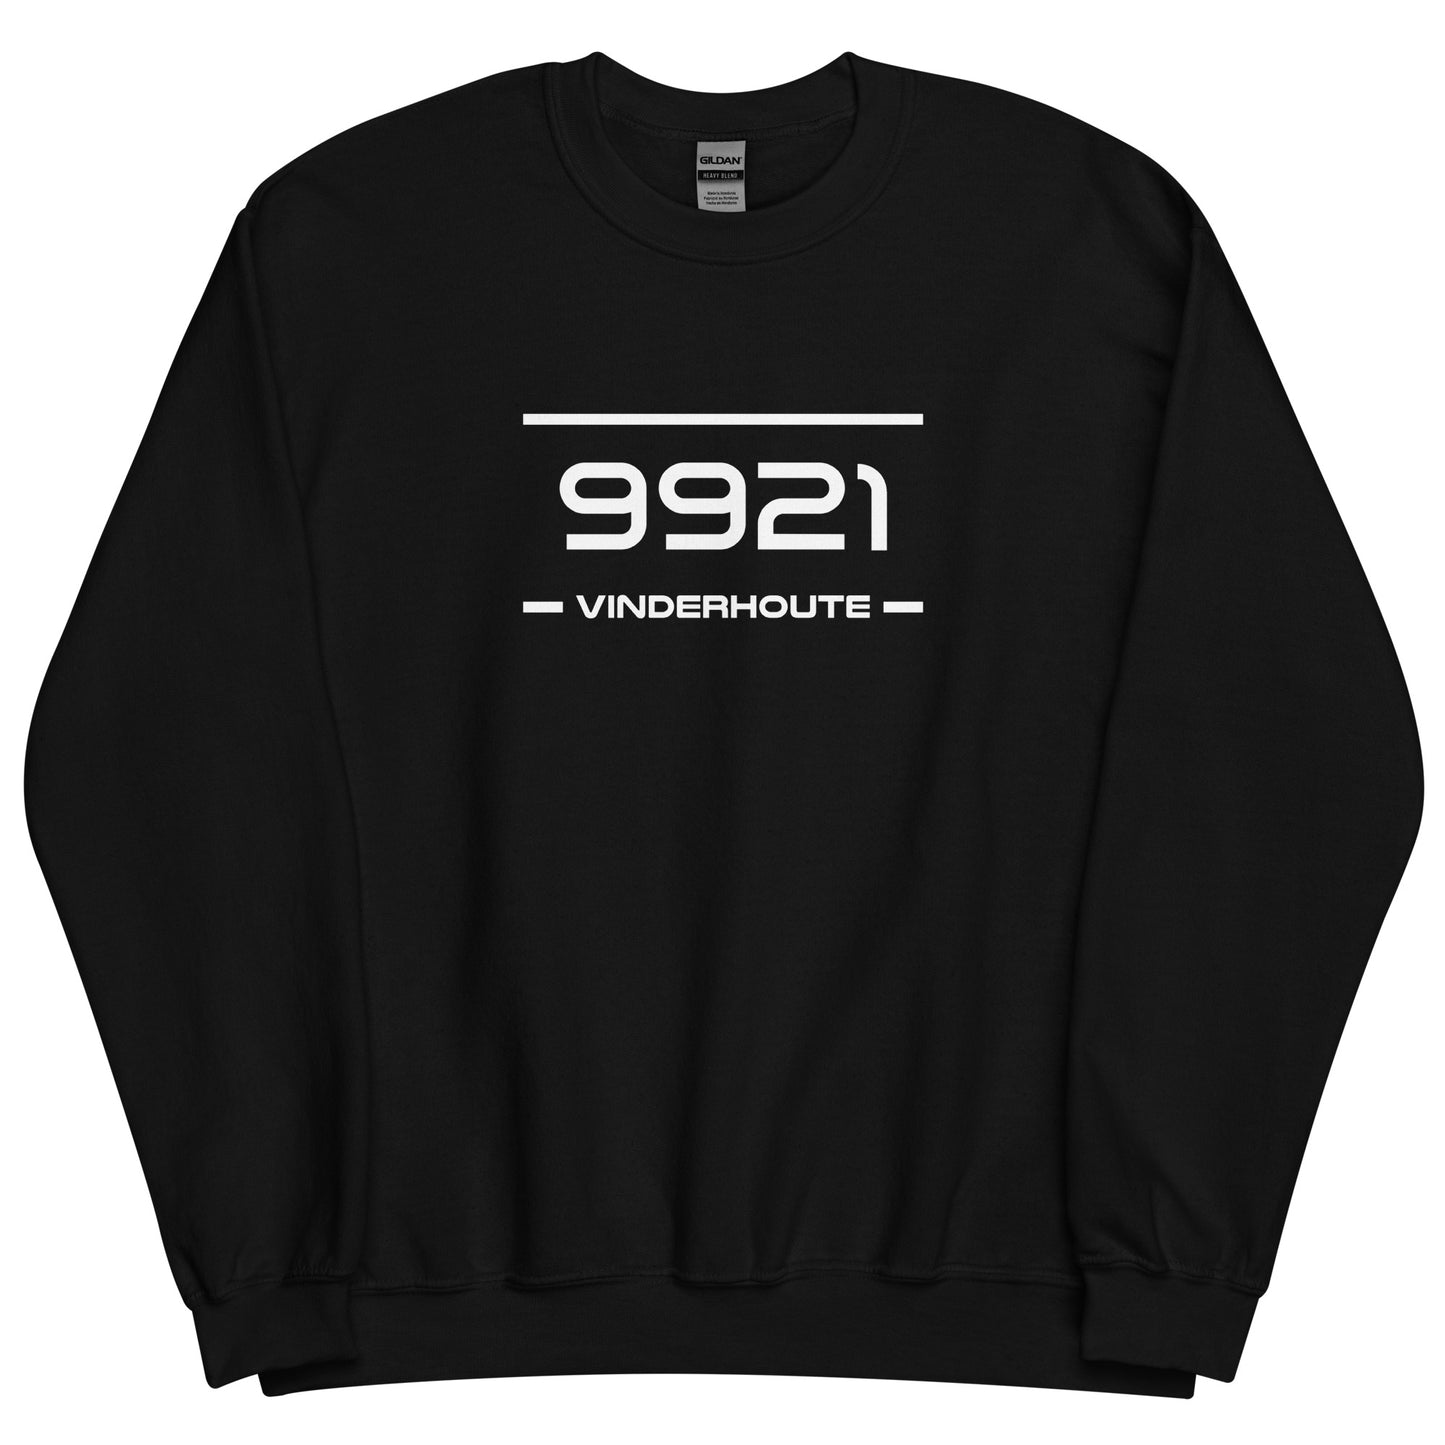 Sweater - 9921 - Vinderhoute (M/V)